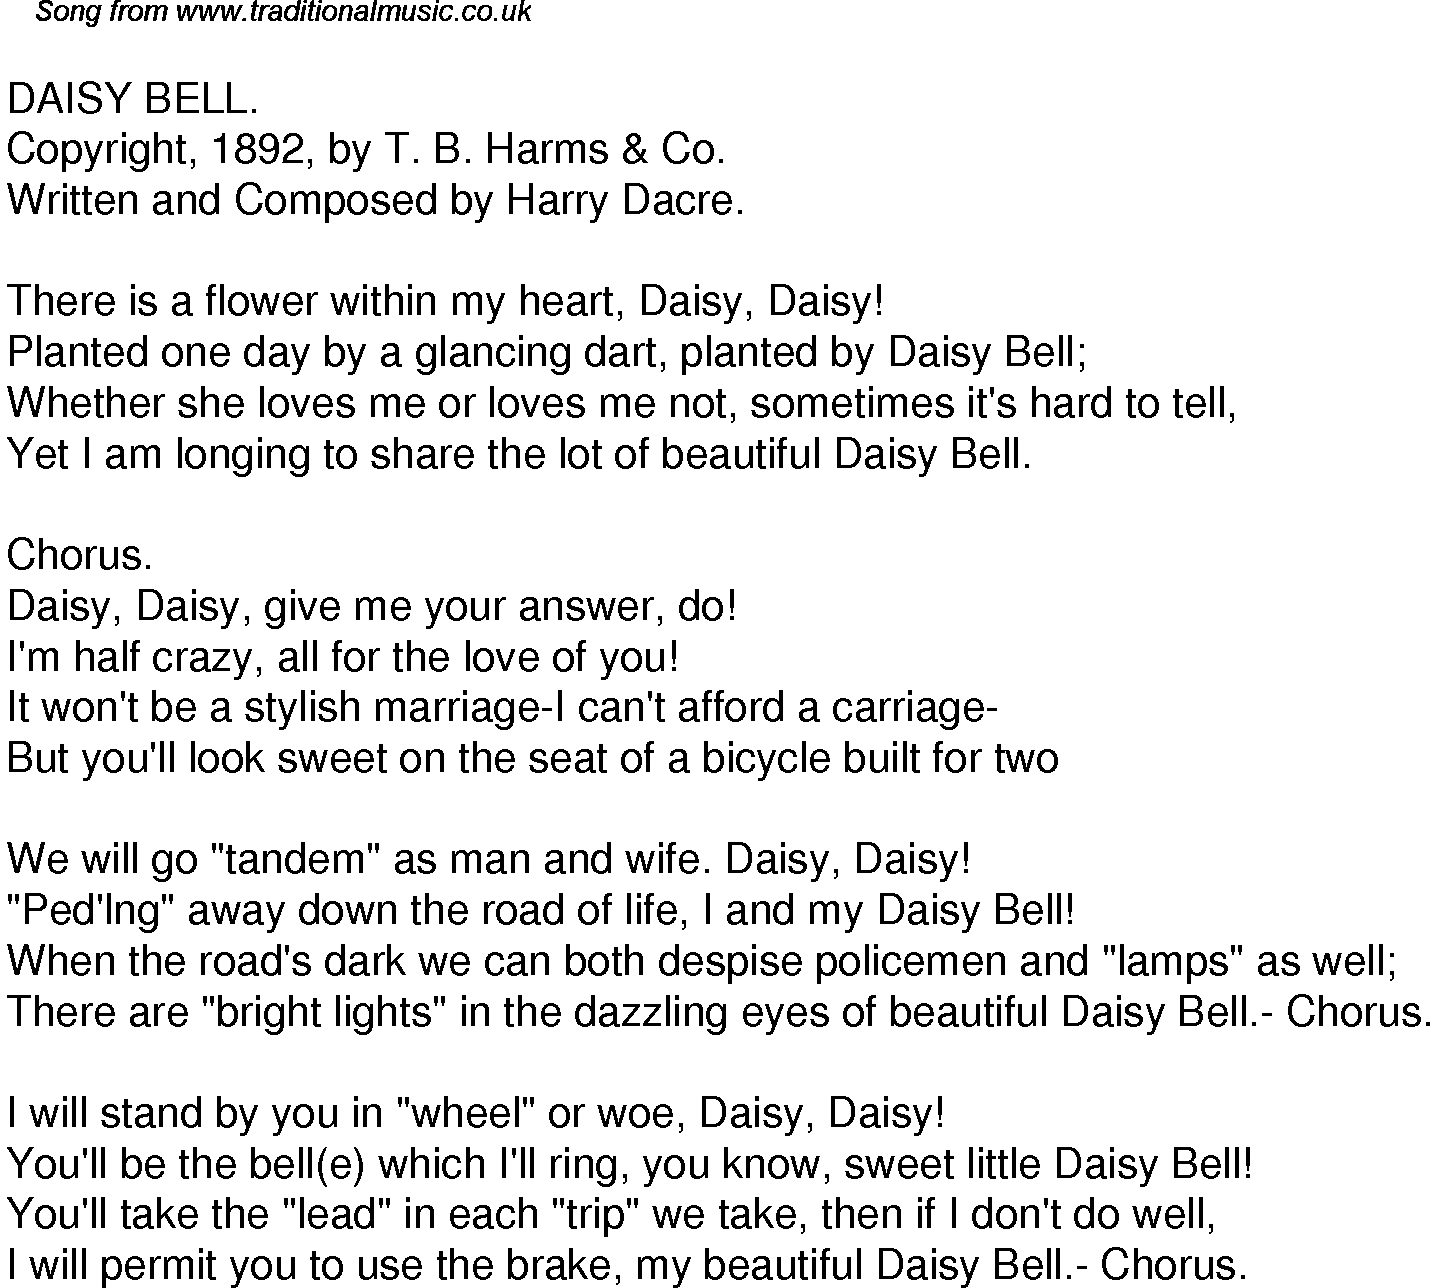 Дейзи белл. Daisy Bell 1961. Daisy Bell 1892. Daisy Bell текст. Daisy Bell песня.